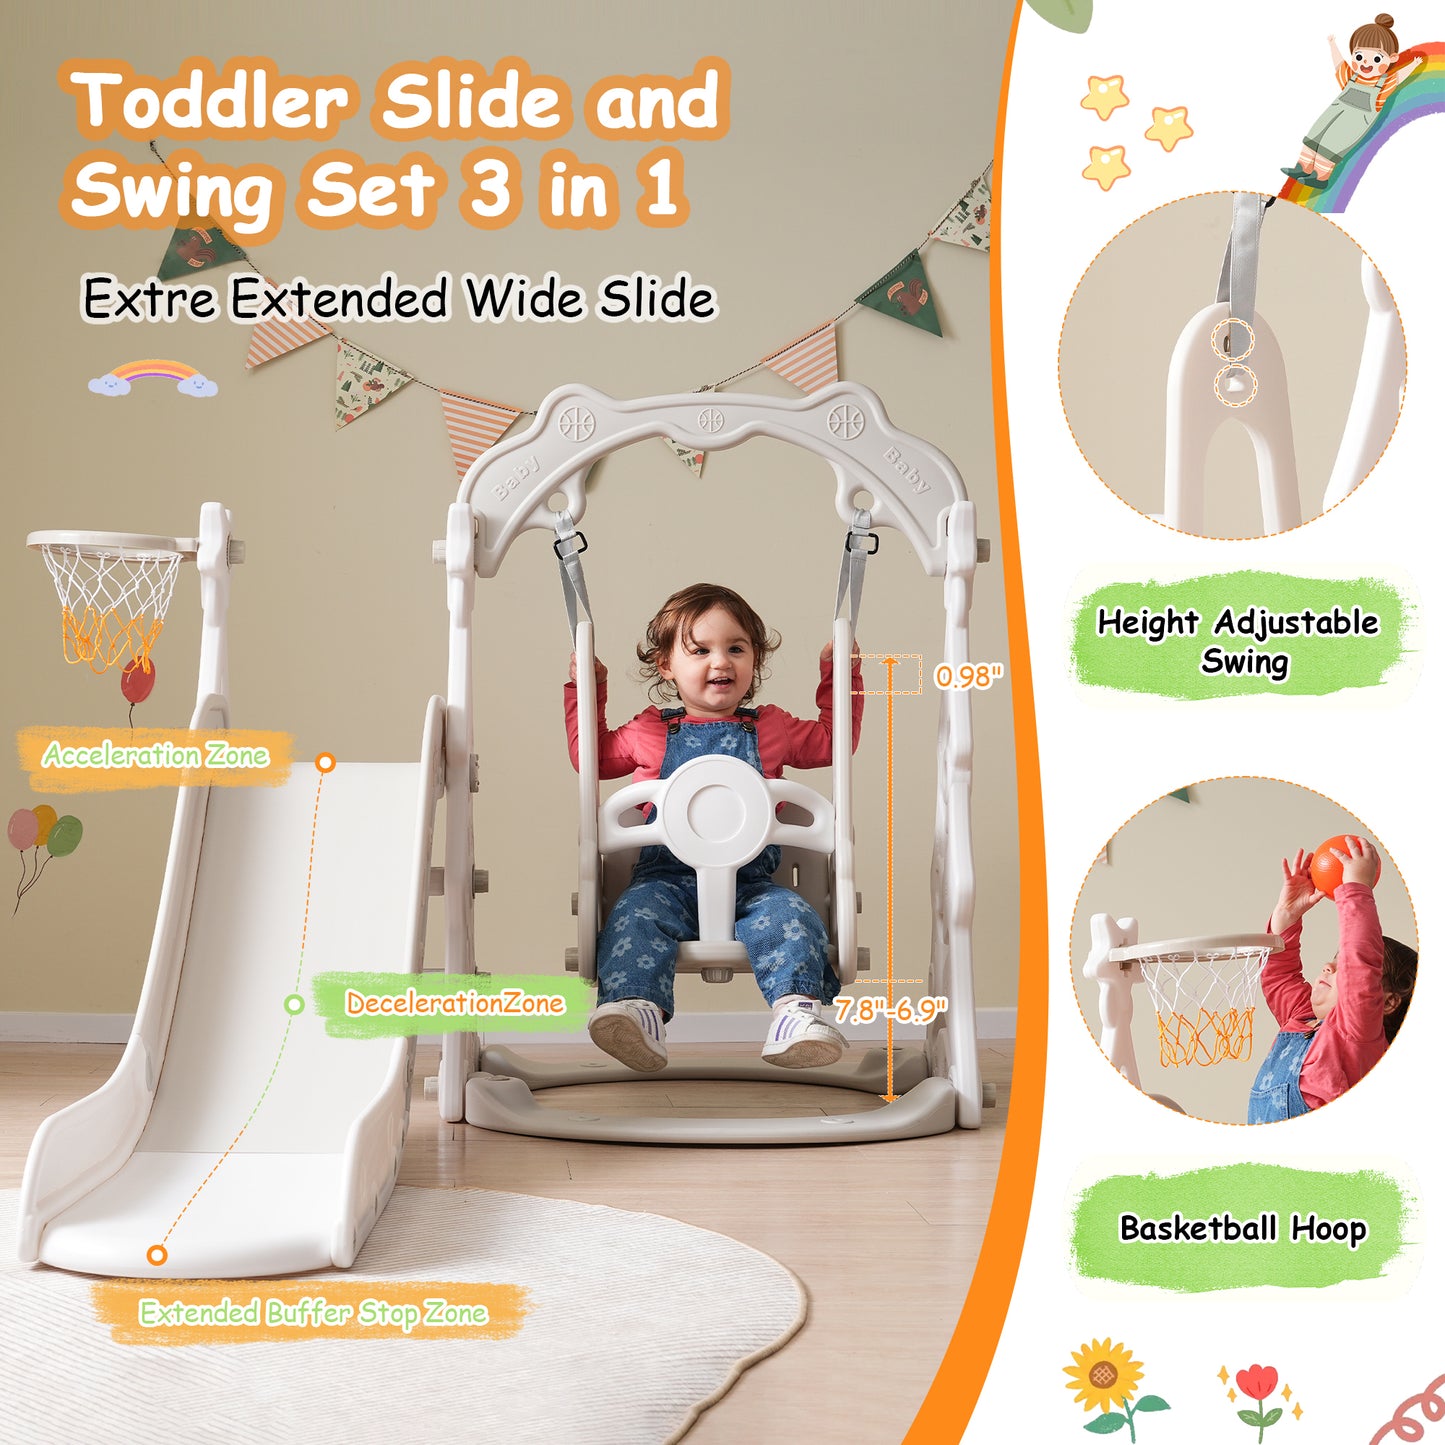 Toddler Slide and Swing Set 3 in 1 for Indoor & Outdoor - Ukerr Home